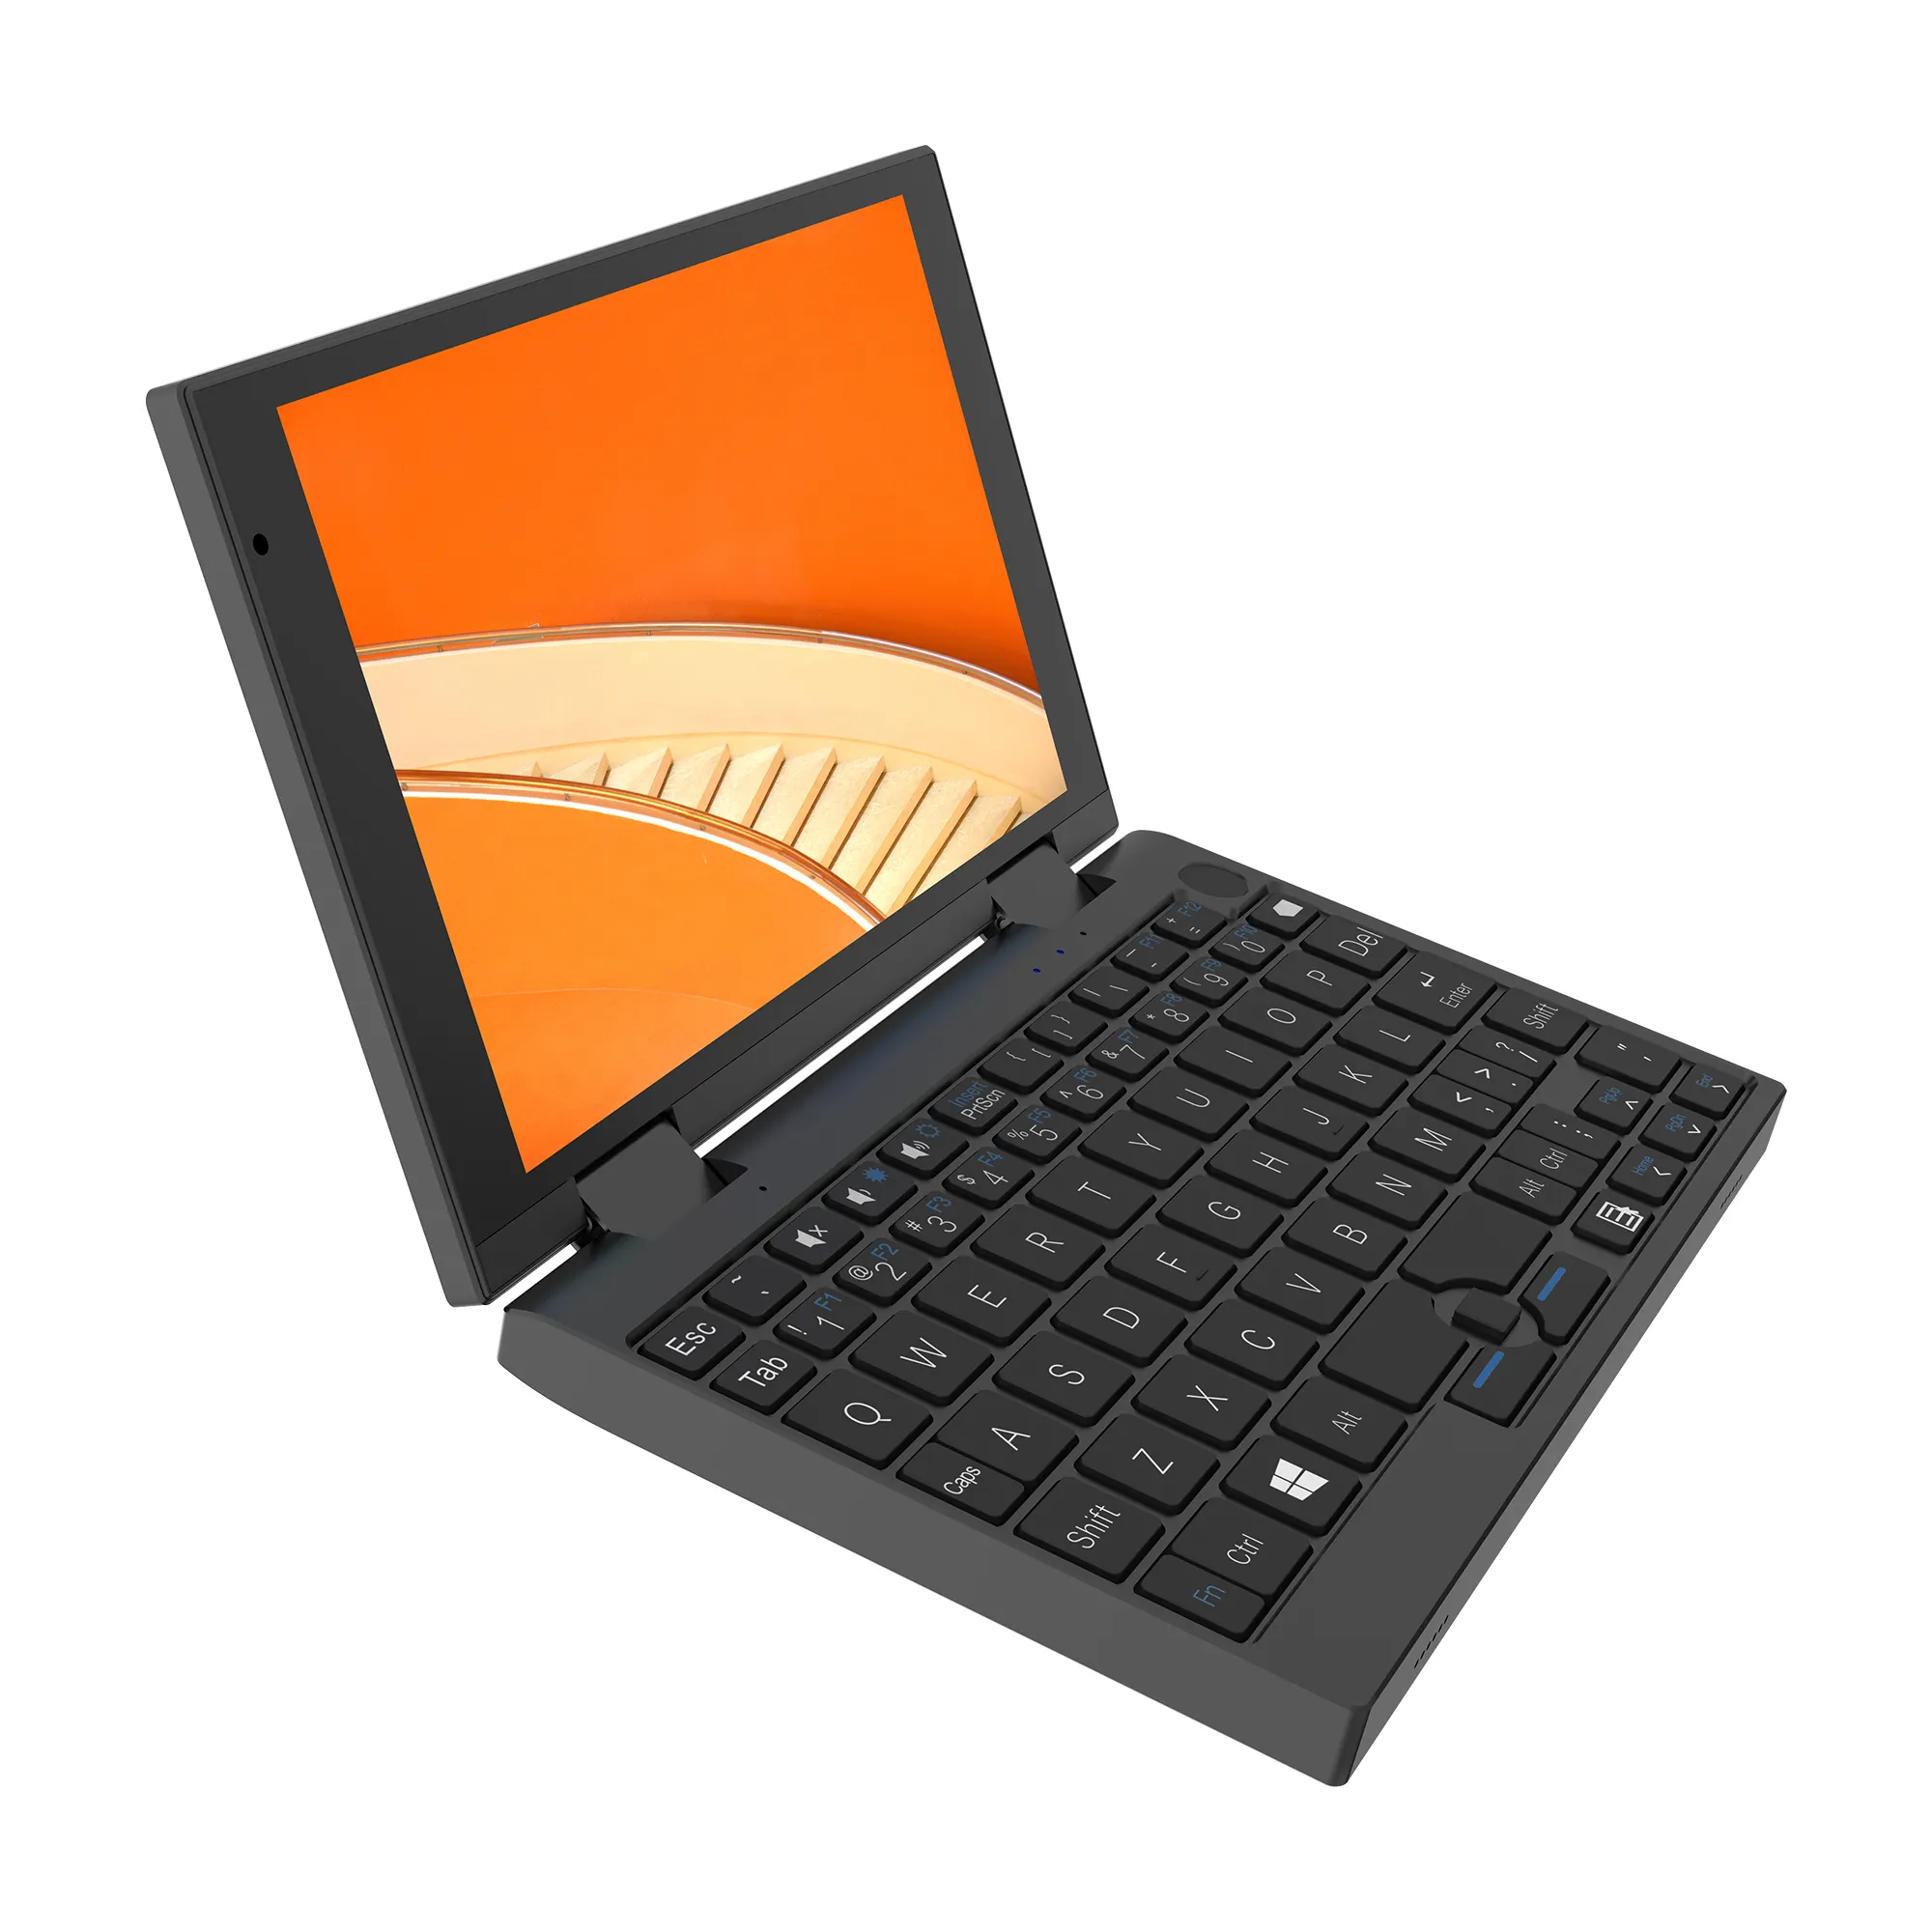 OEM ODM laptop 7 inch mini netbook laptop sale ordinateur portable yoga laptop